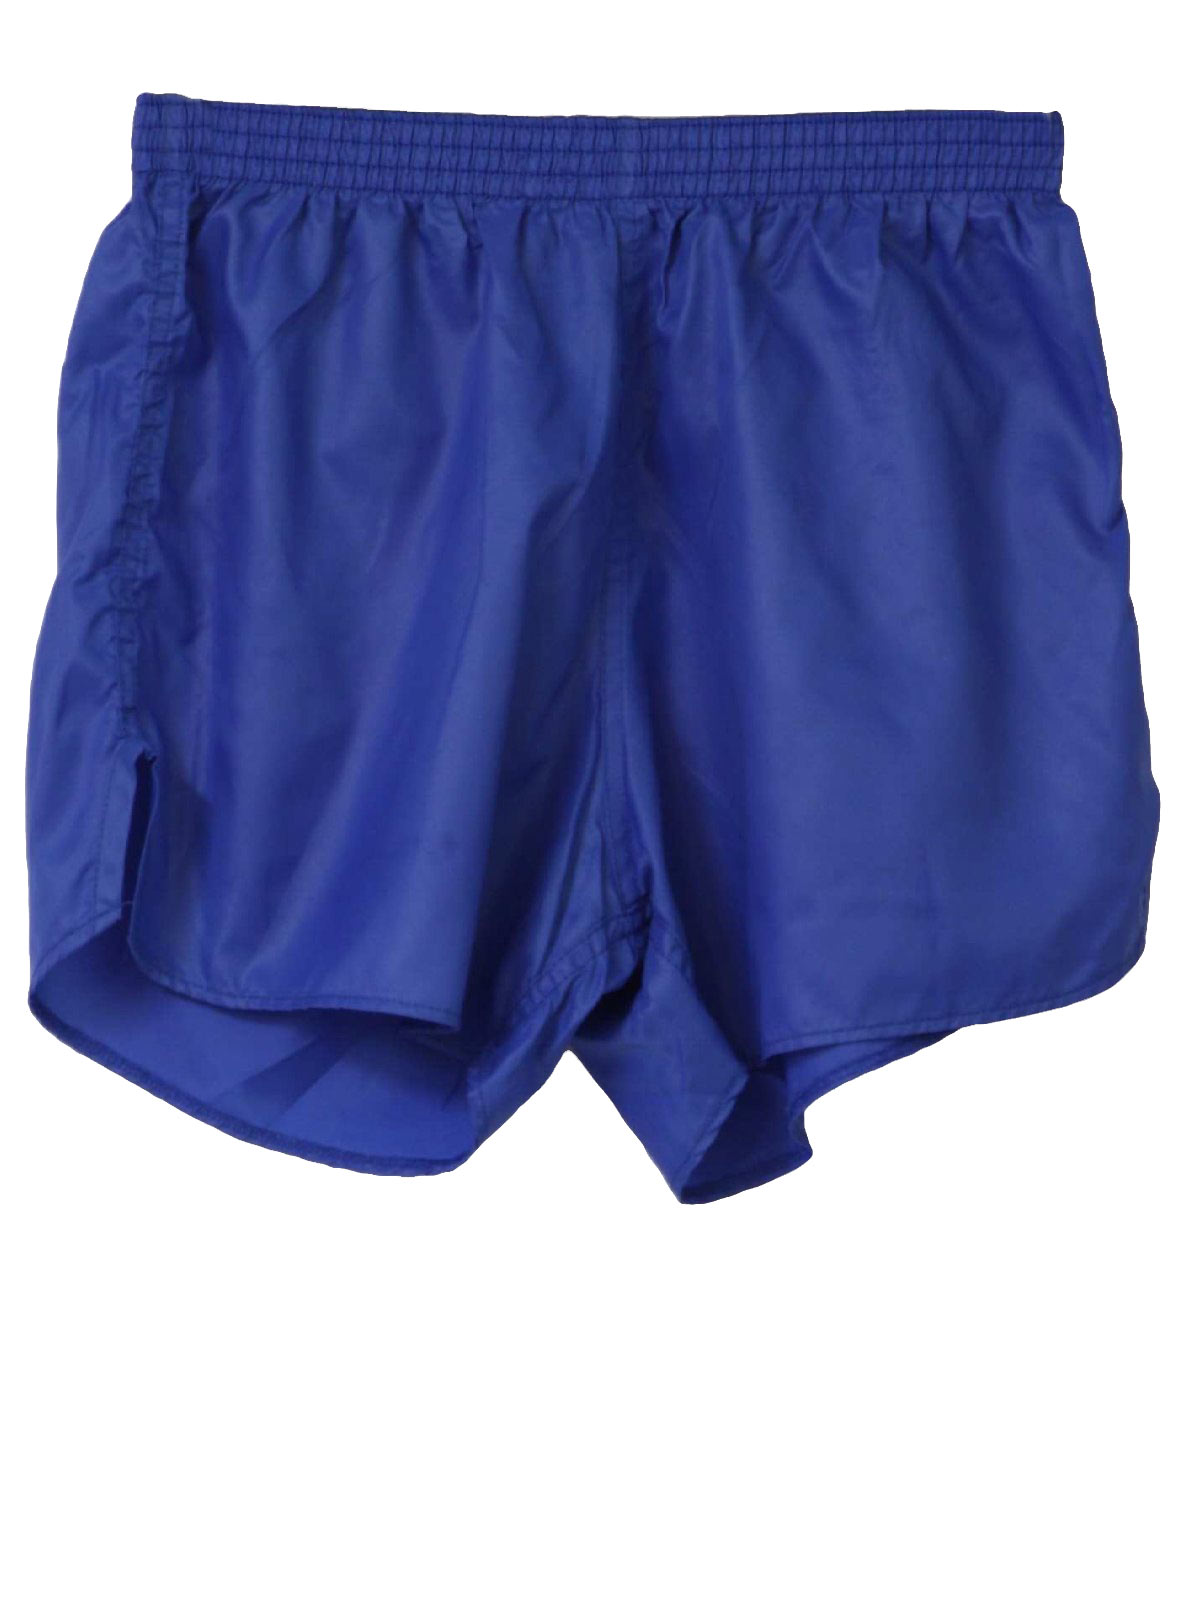 1980's Vintage Soffe Shorts Shorts: 80s -Soffe Shorts- Unisex blue and ...